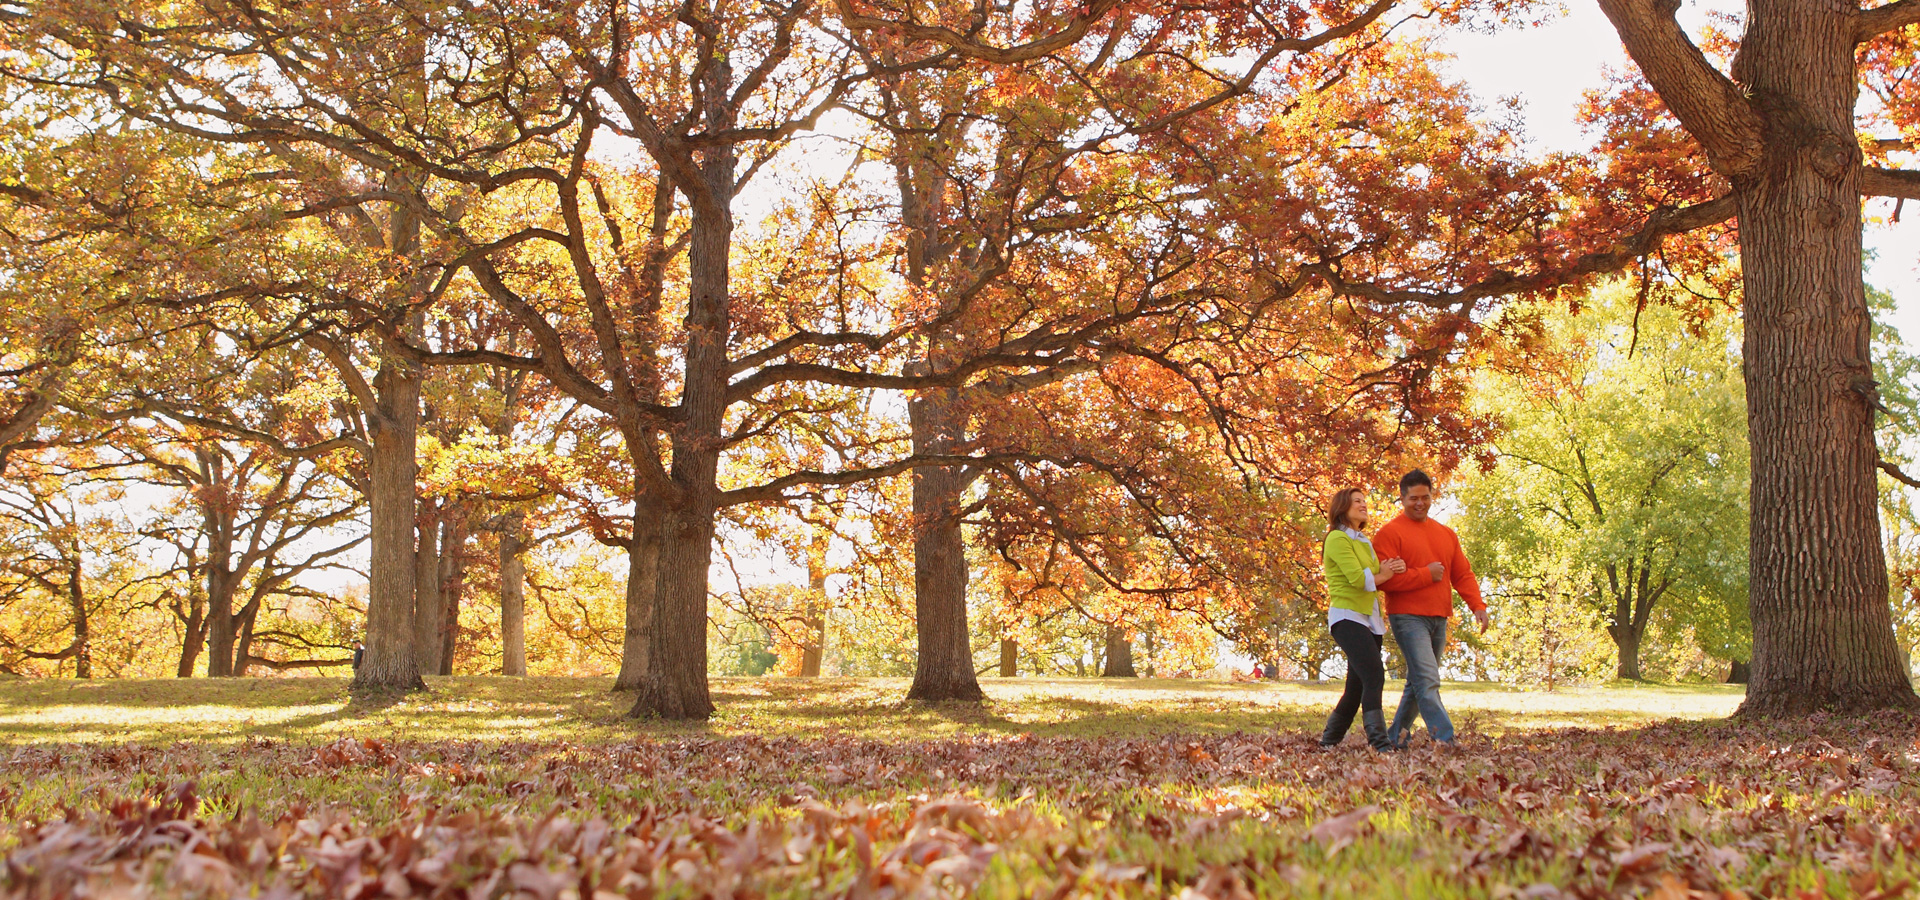 A couple walk among the oaks in fall